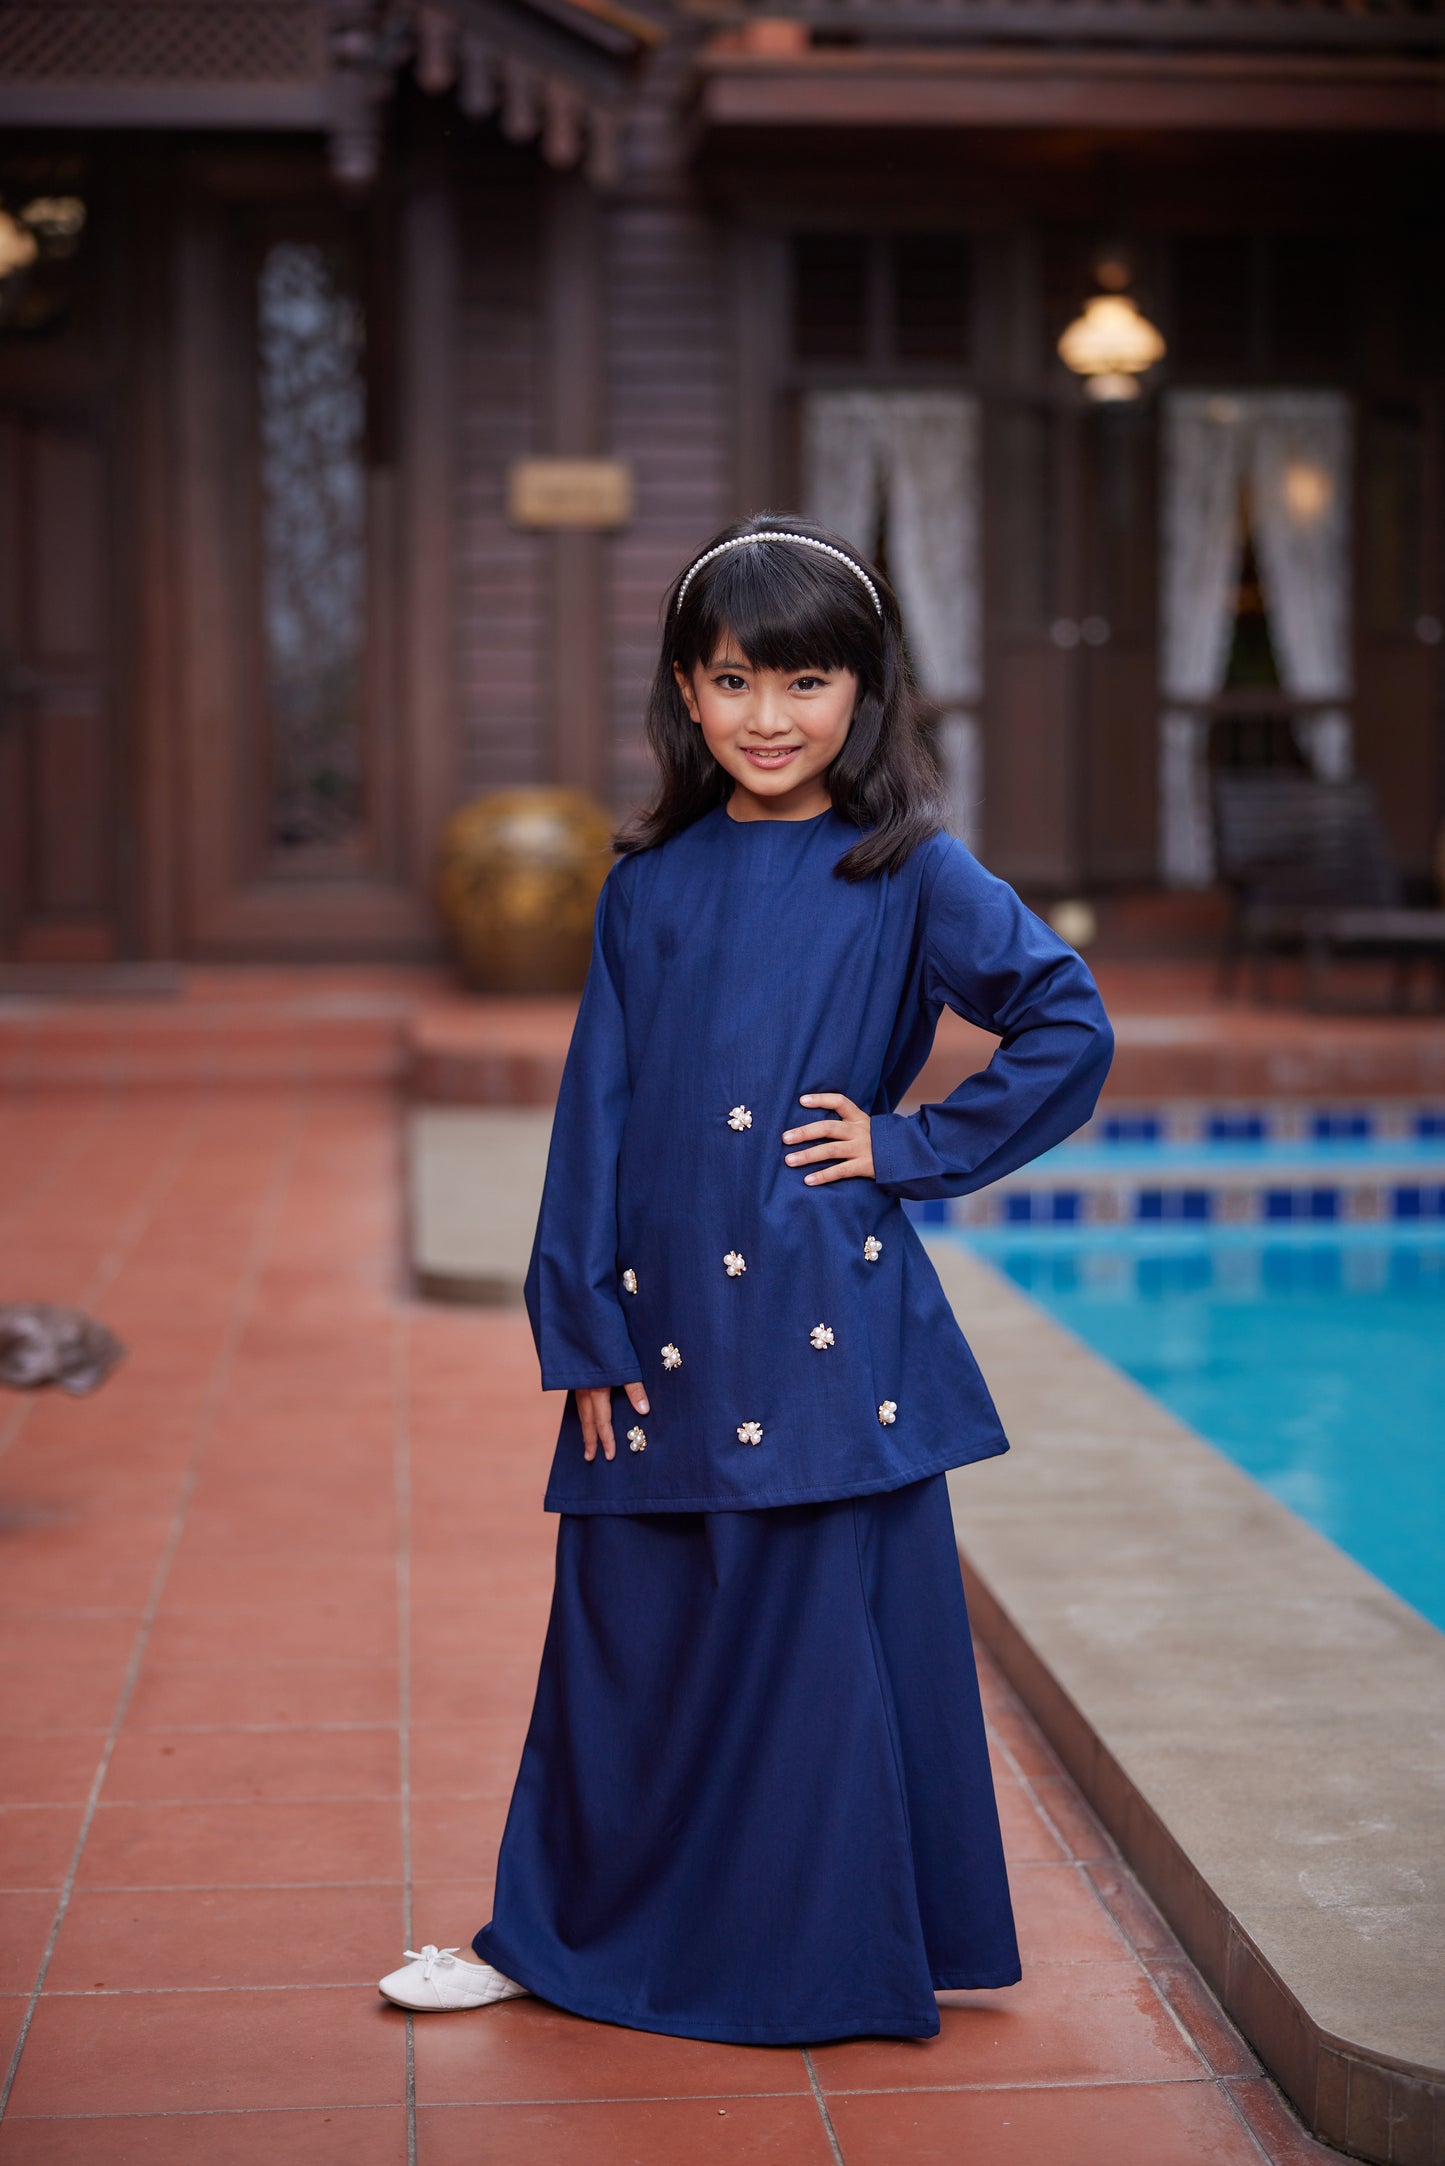 Baju Kurung Plain Gelora Raya Kids - Navy Blue